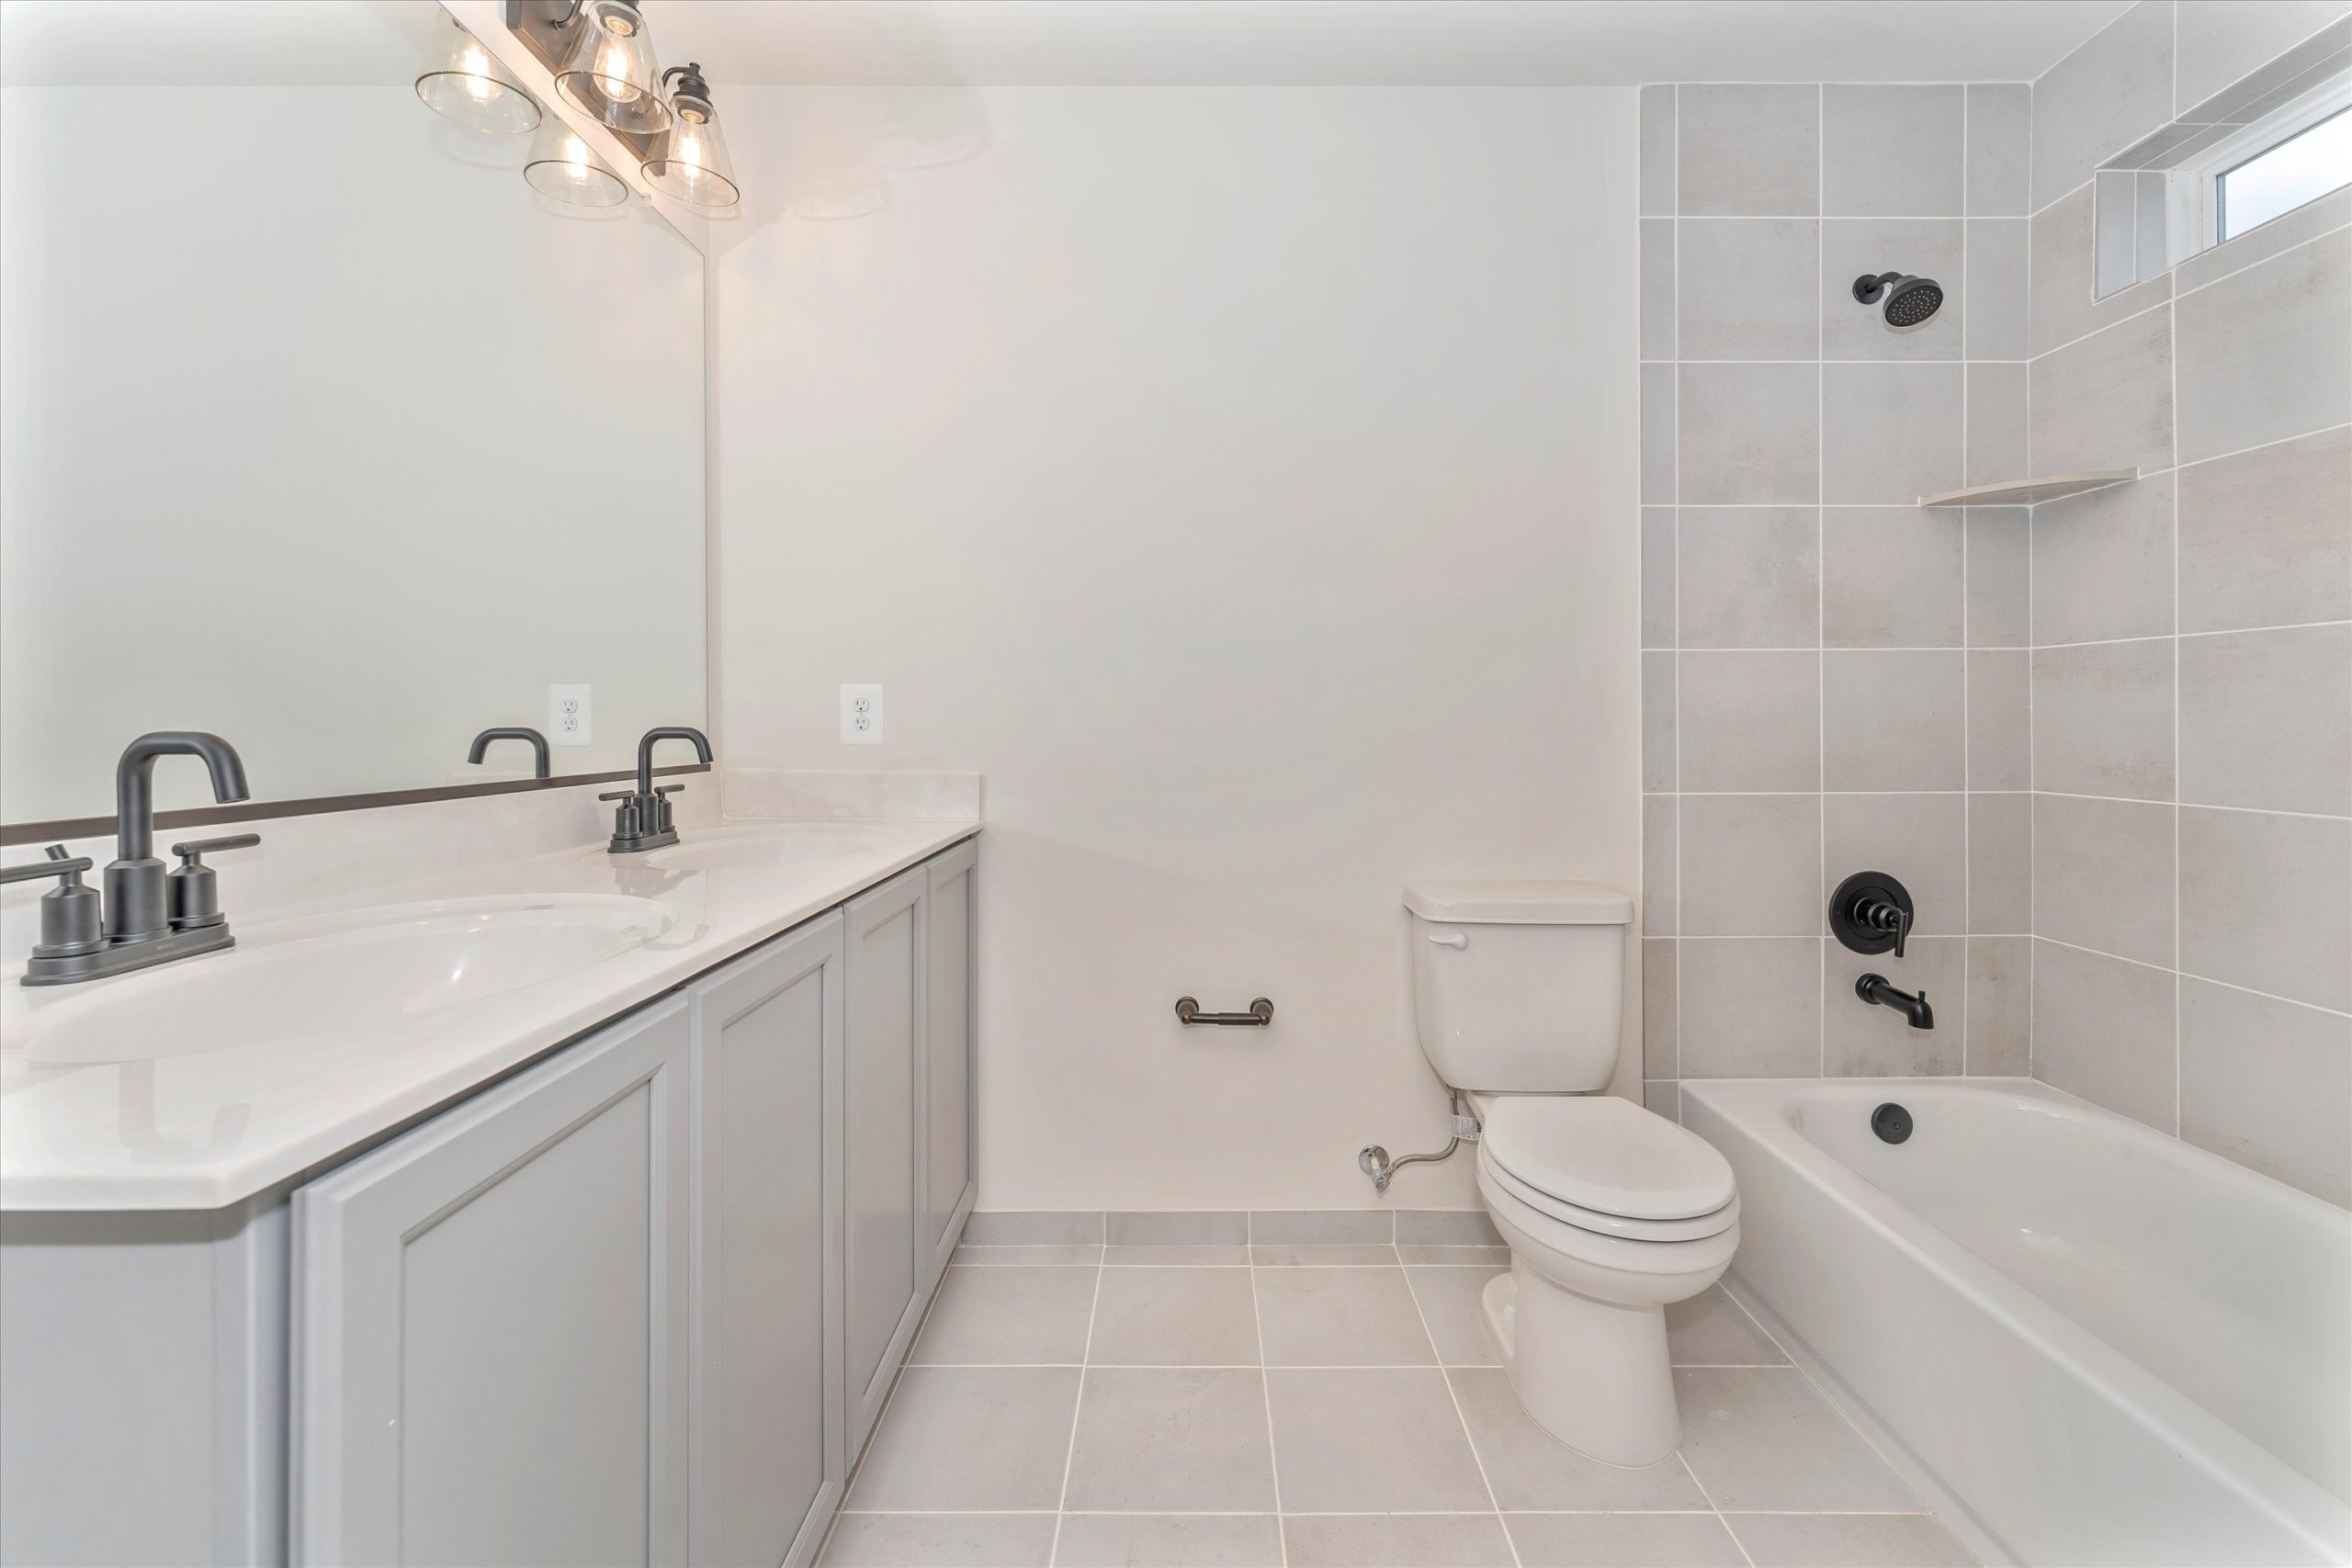 Radford IV bathroom New Home by Ryan Legacy Builders, Frederick & Myersville MD